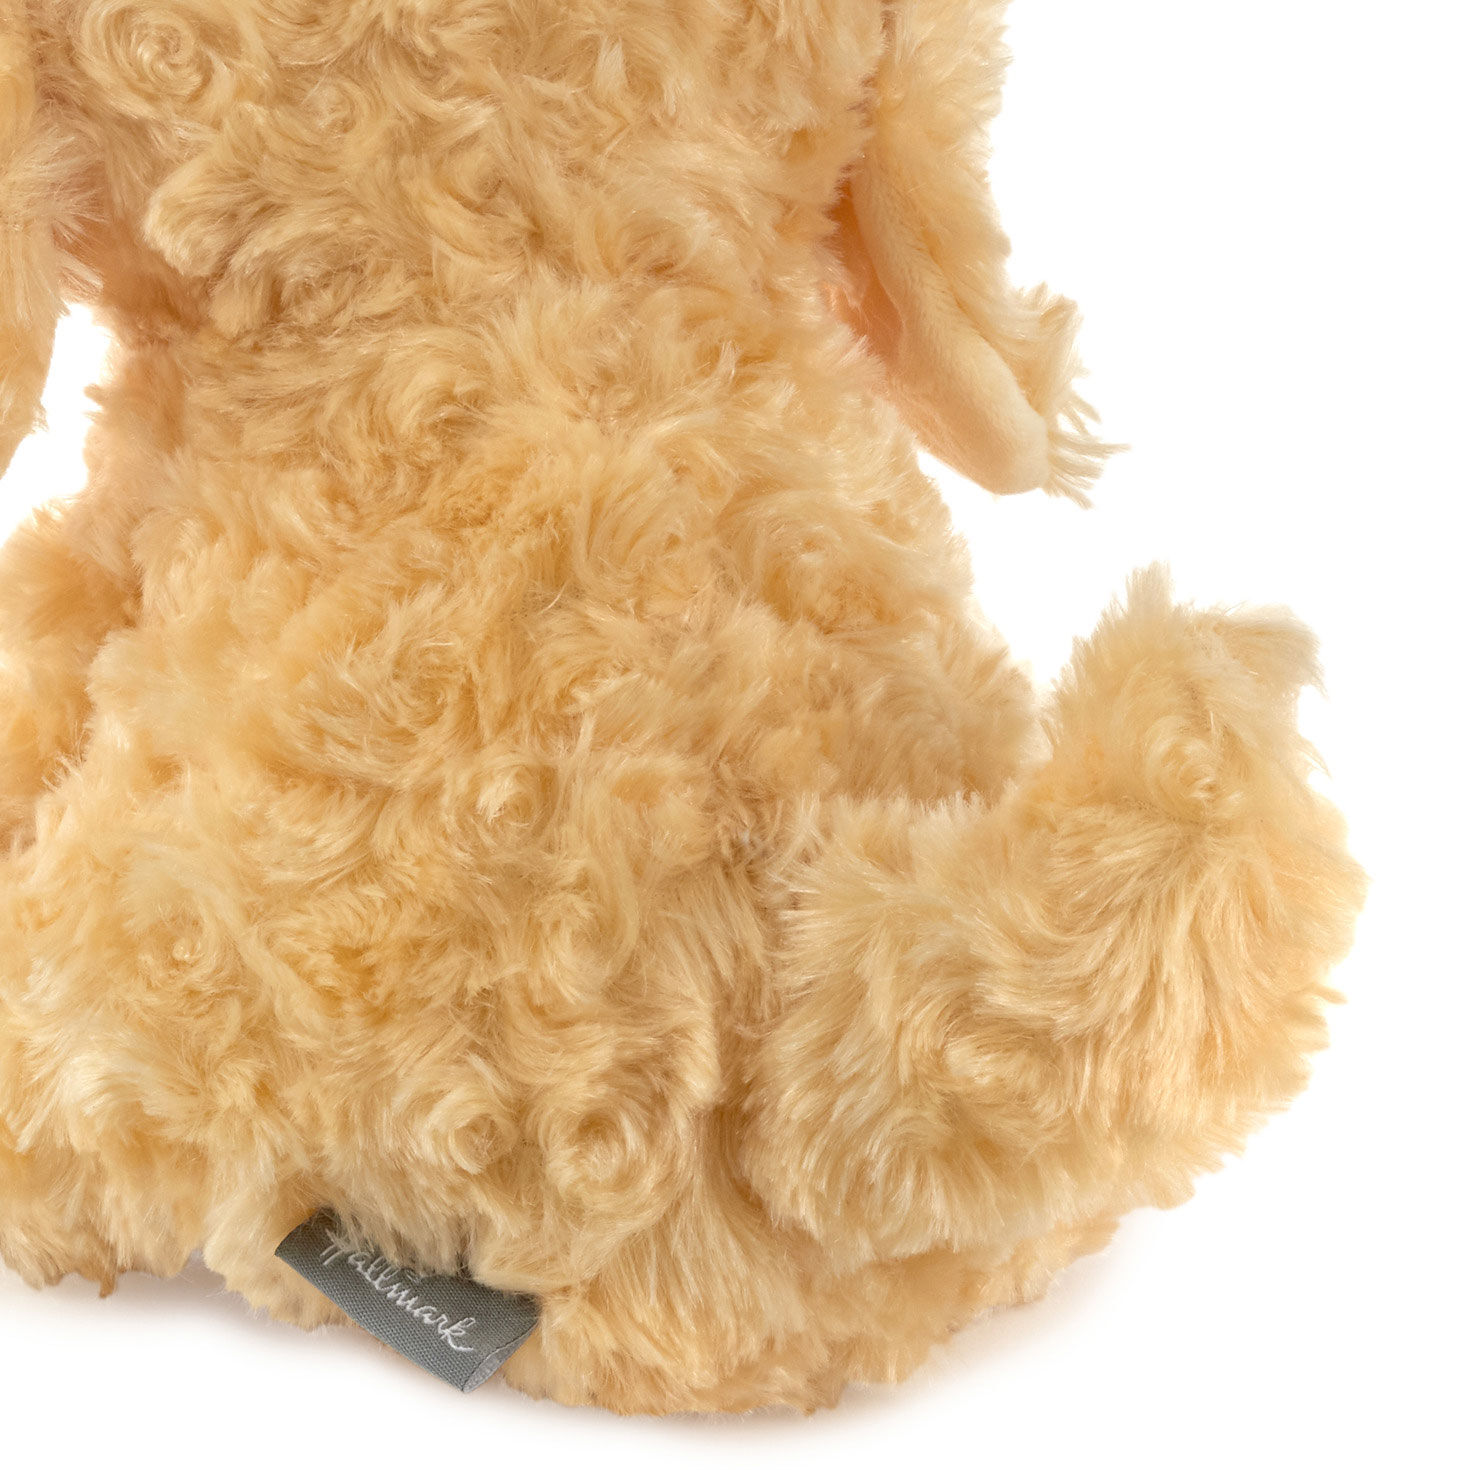 Puppy Dog Stuffed Animal, 8" for only USD 18.99 | Hallmark